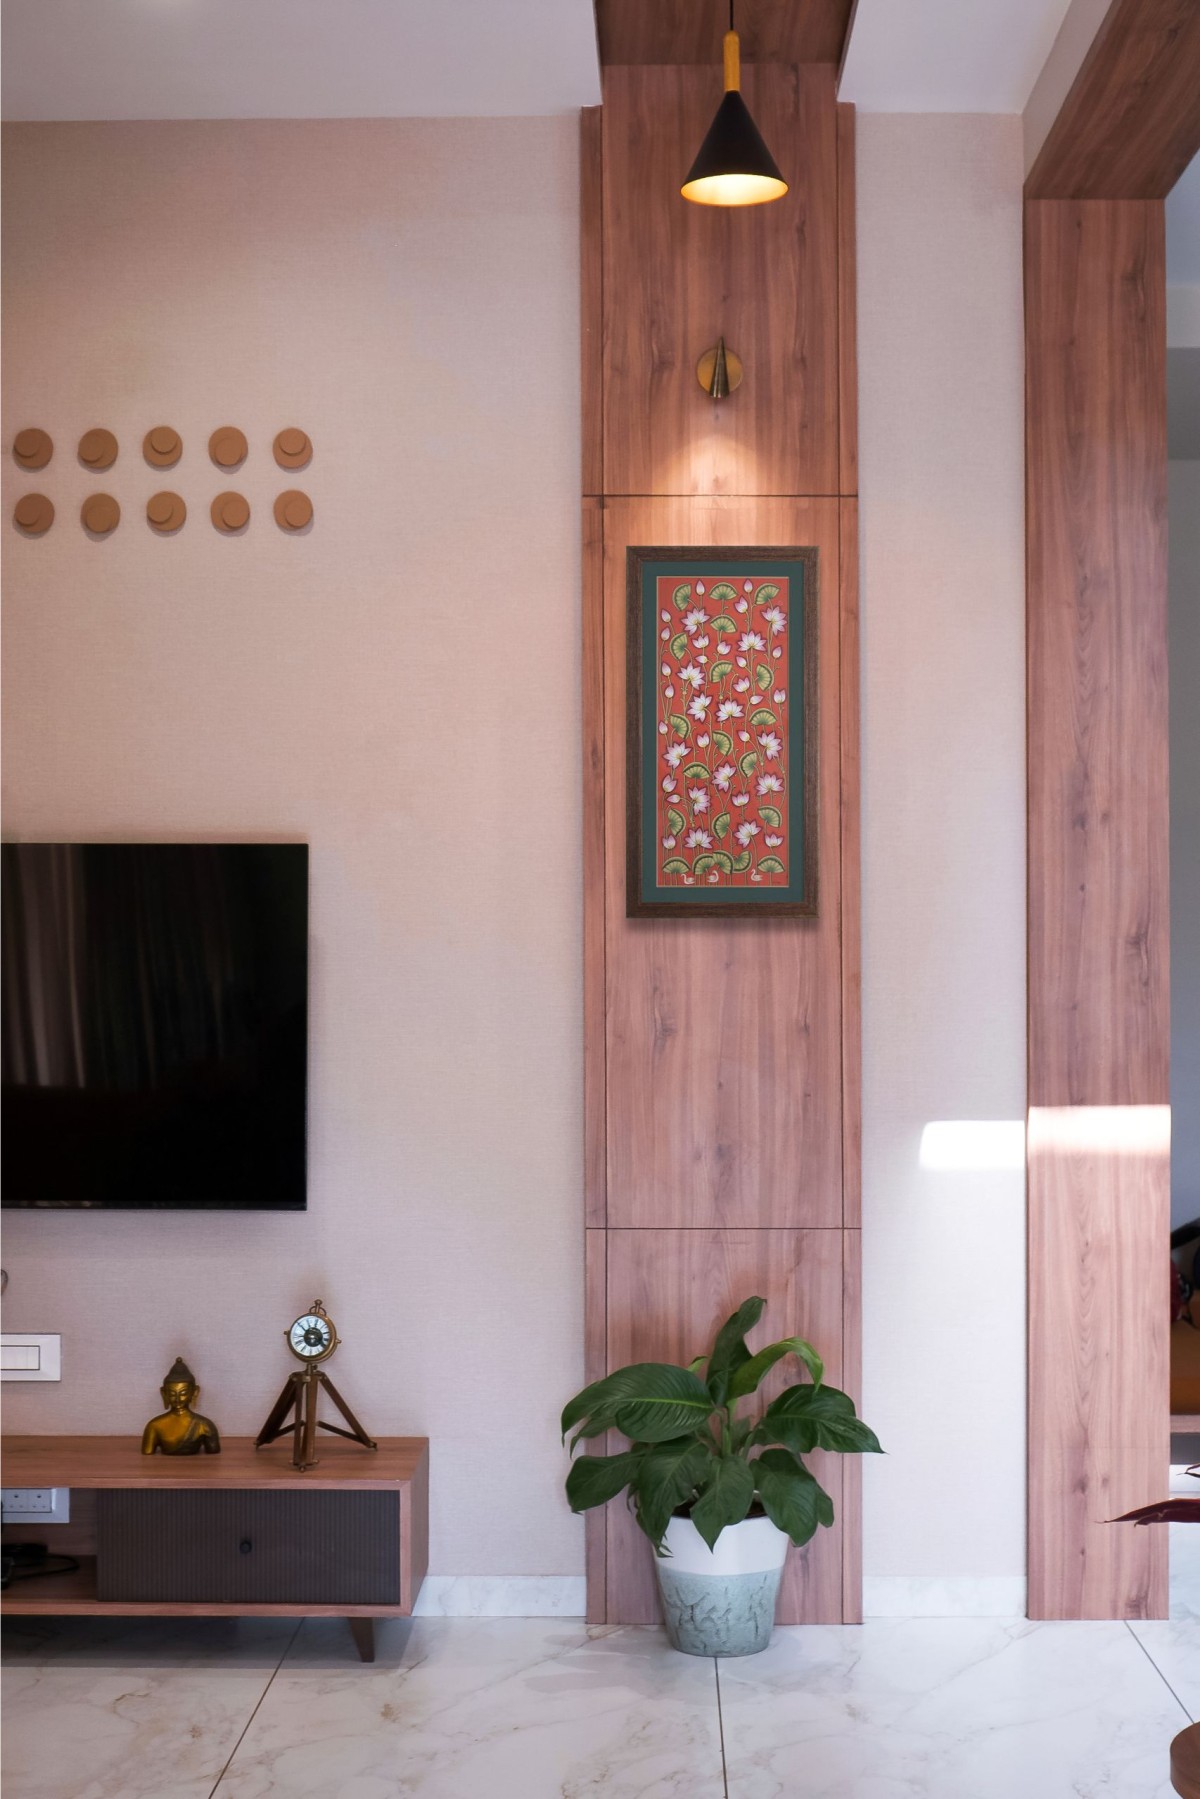 TV Unit of Mauli - A House With Simplicity by Vishwakarma